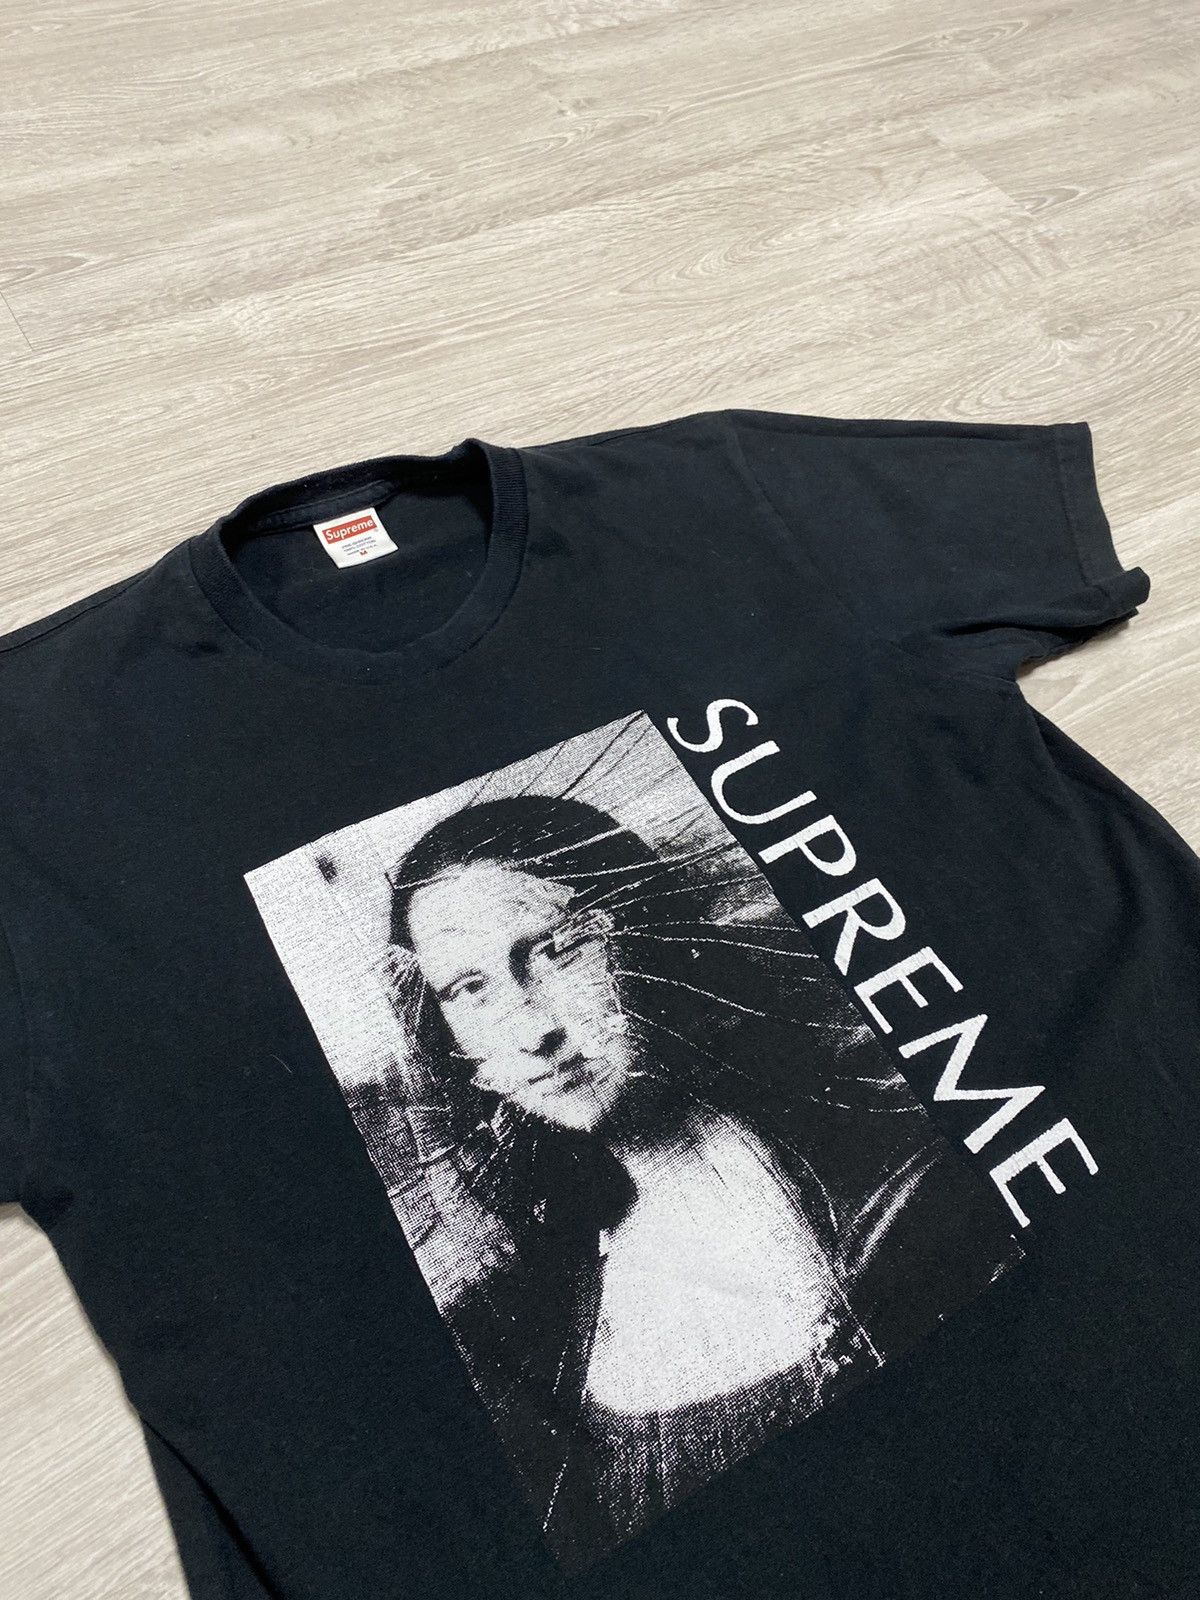 Supreme Supreme x Mona Lisa Art T-shirt Size M | Grailed